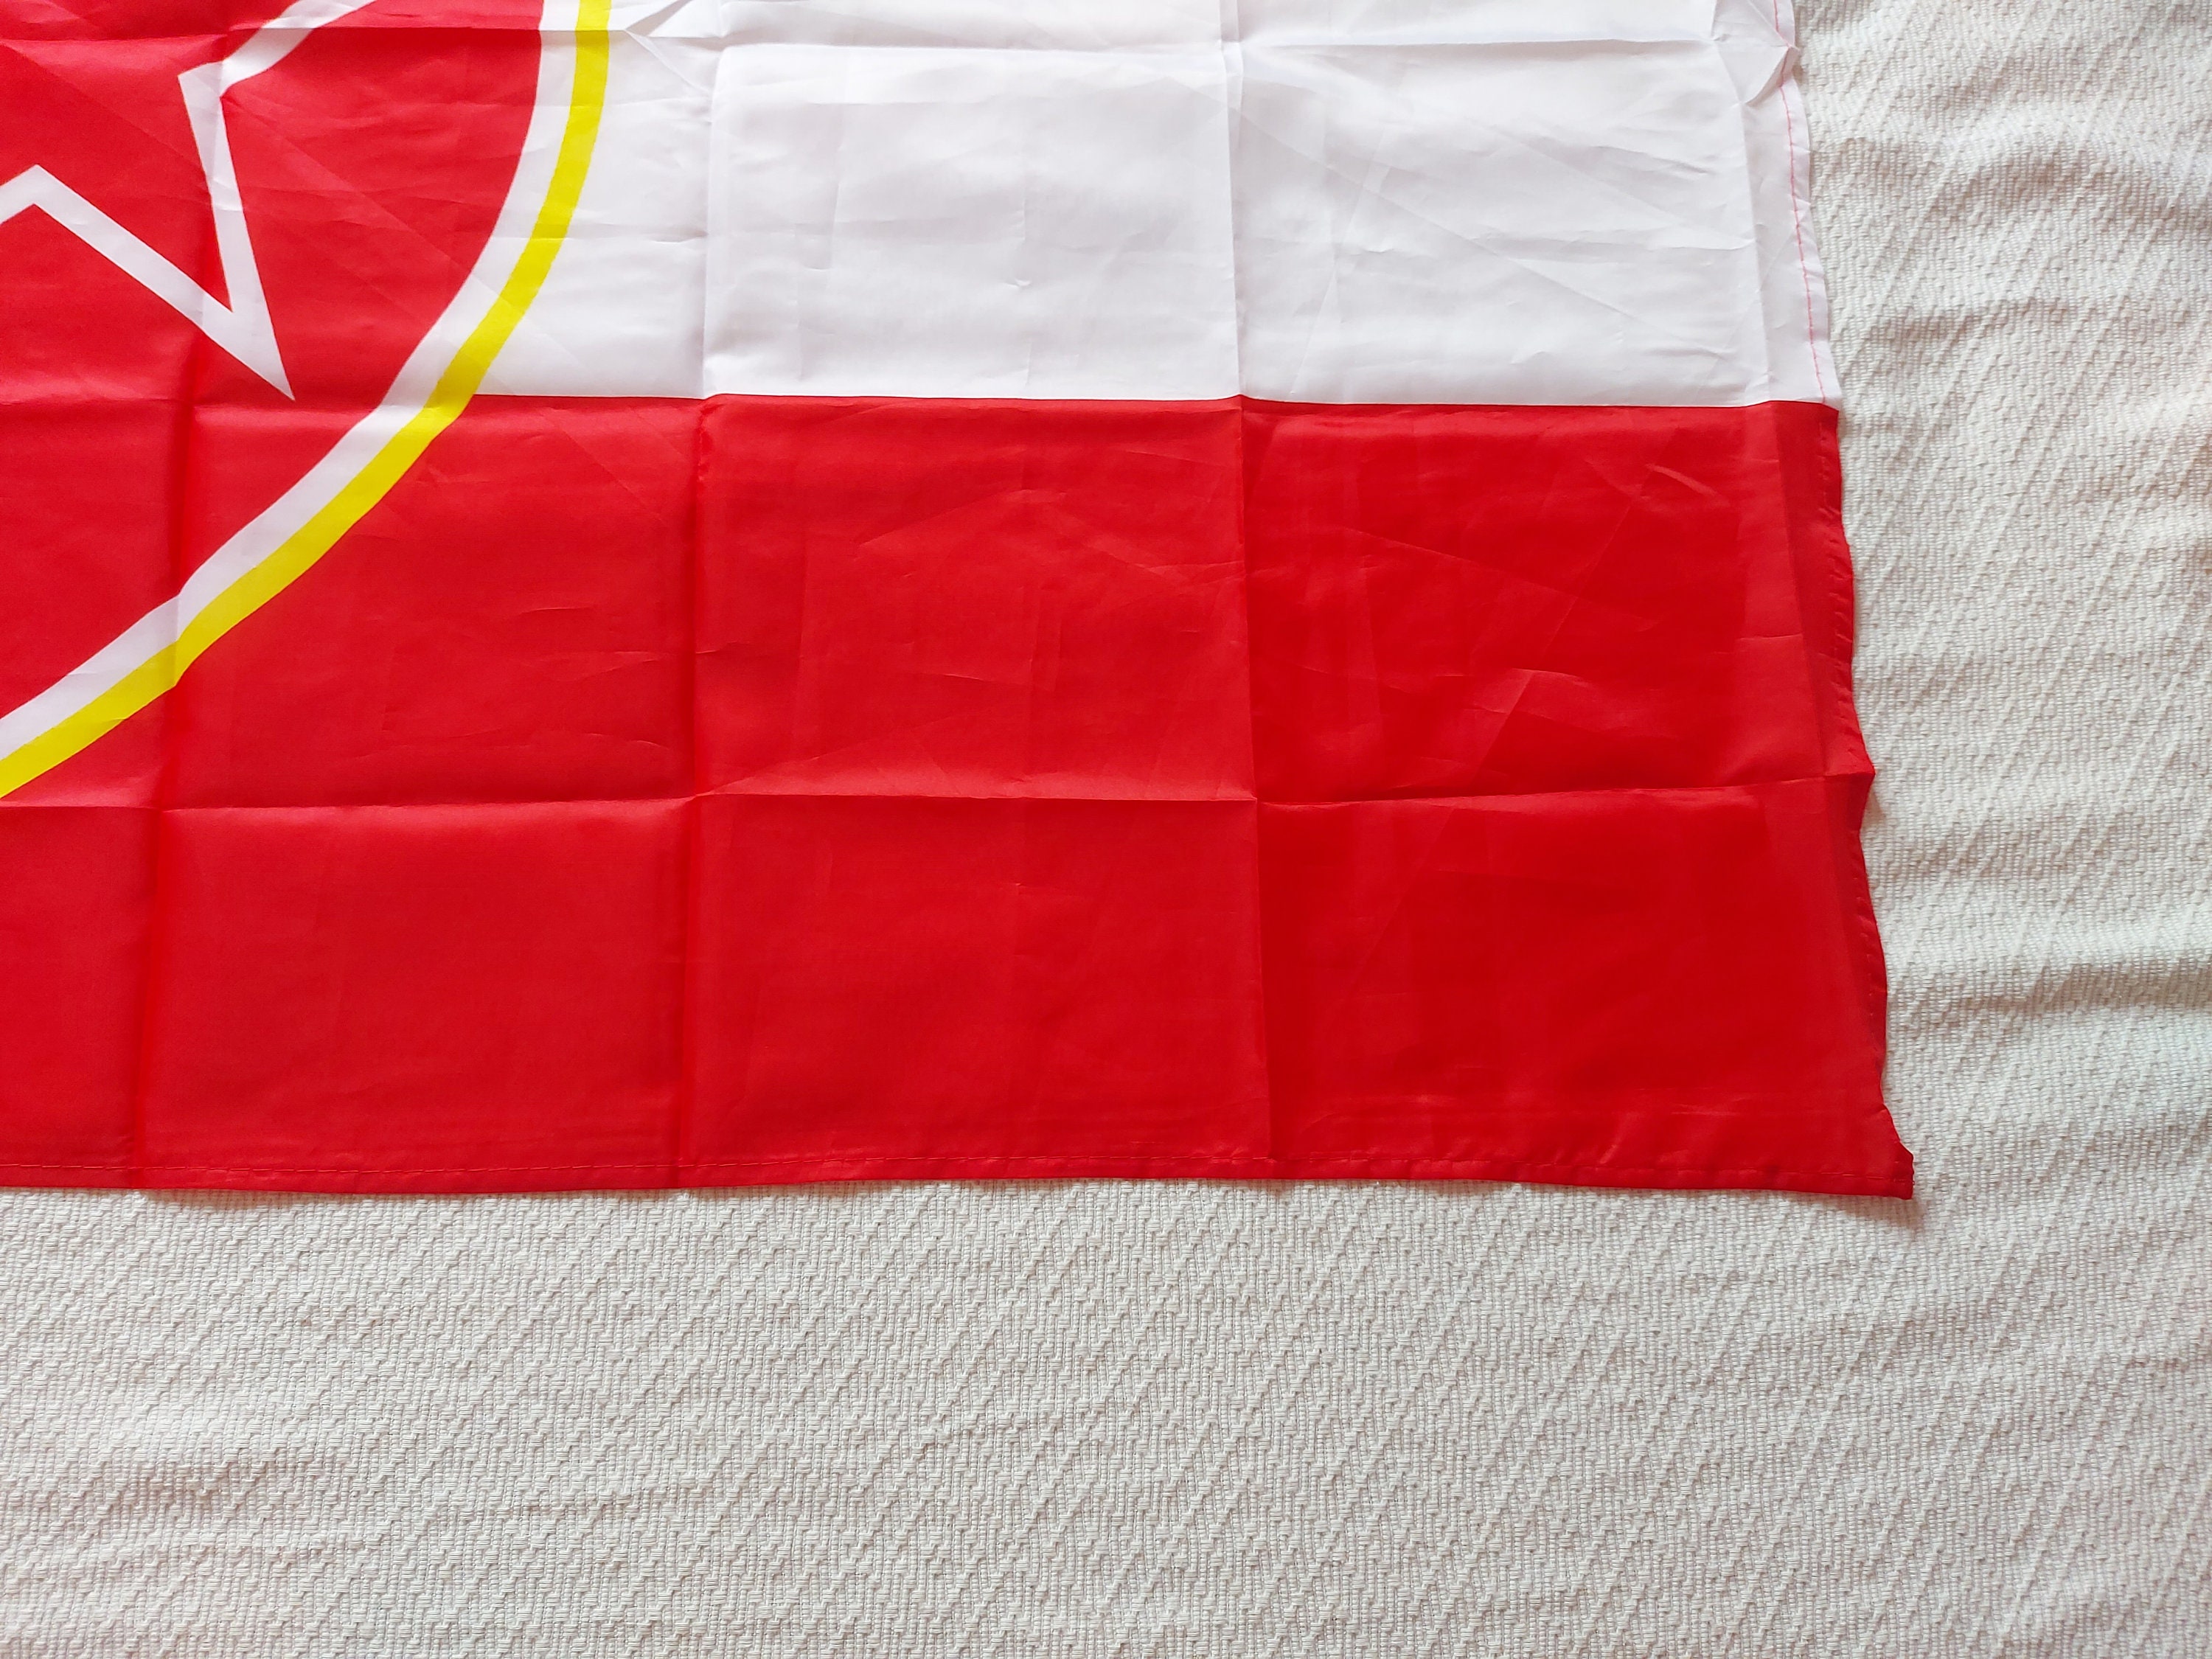 Big Red Star Crvena Zvezda Foodball Club Flag - approx 140 x 90cm